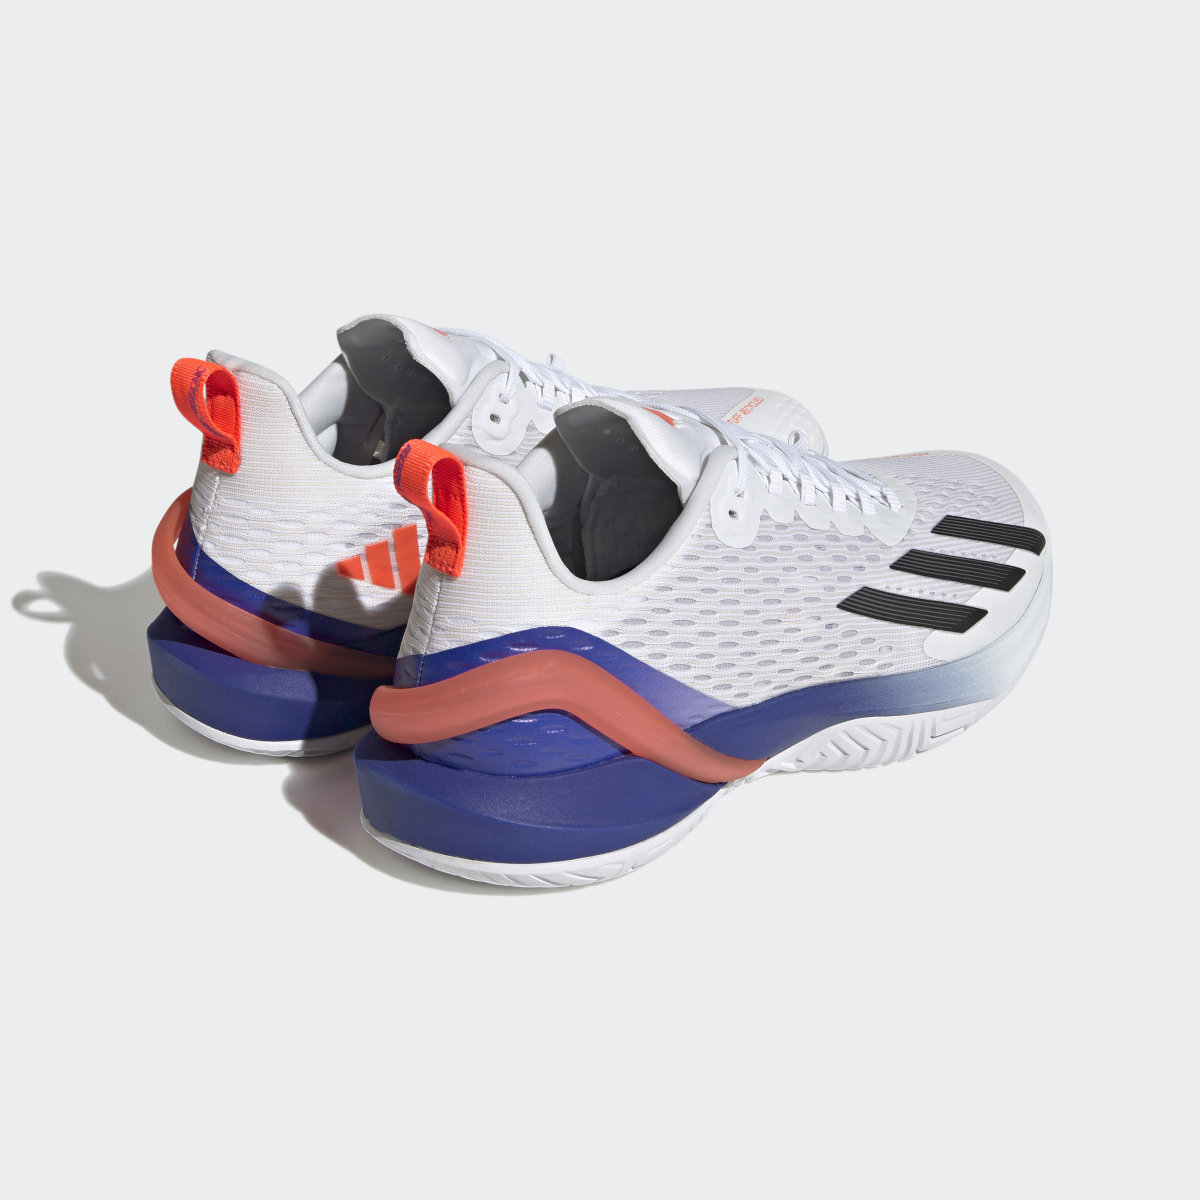 Adidas adizero Cybersonic Shoes. 13